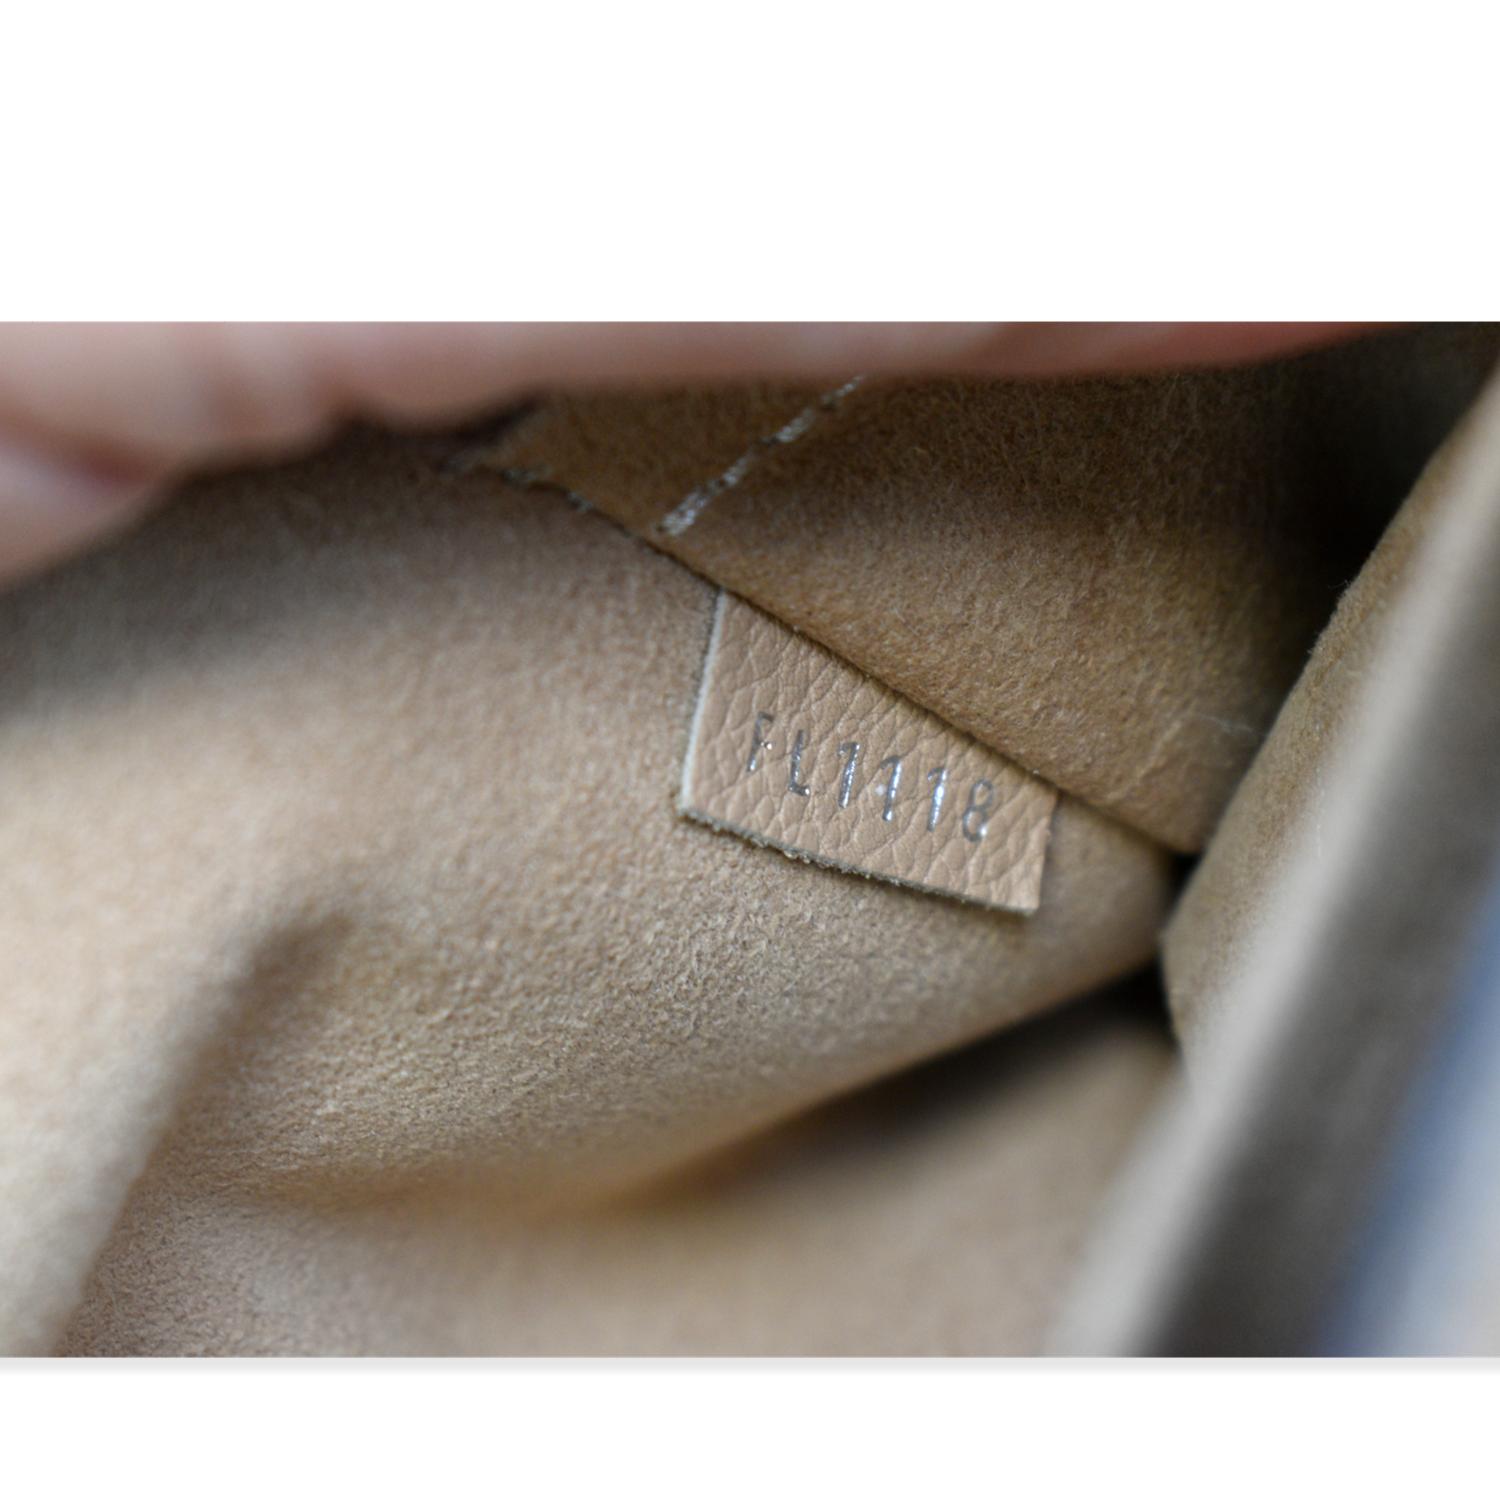 Louis Vuitton 2018 pre-owned My Lockme BB Shoulder Bag - Farfetch